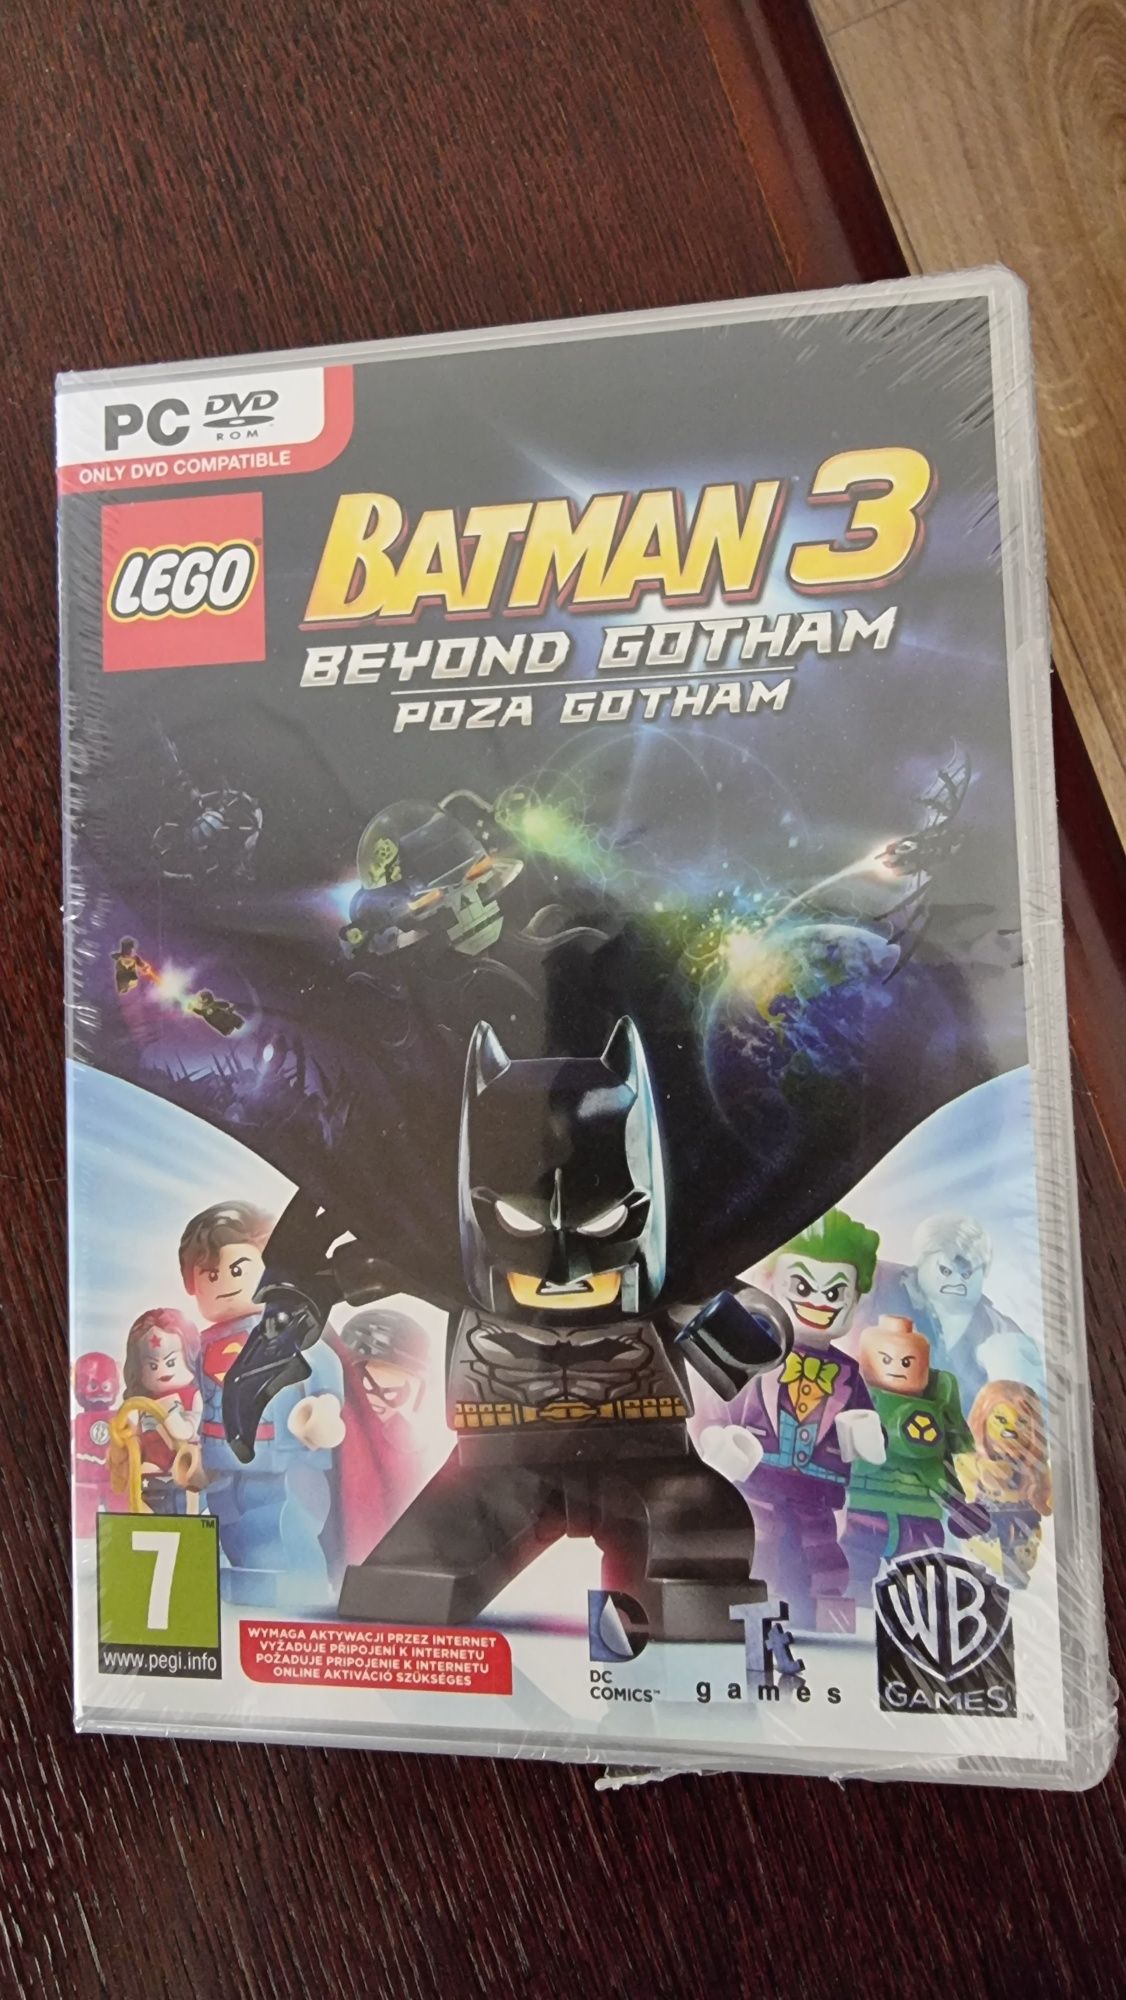 Gra Lego Batman 3 Poza Gotham PC dvd